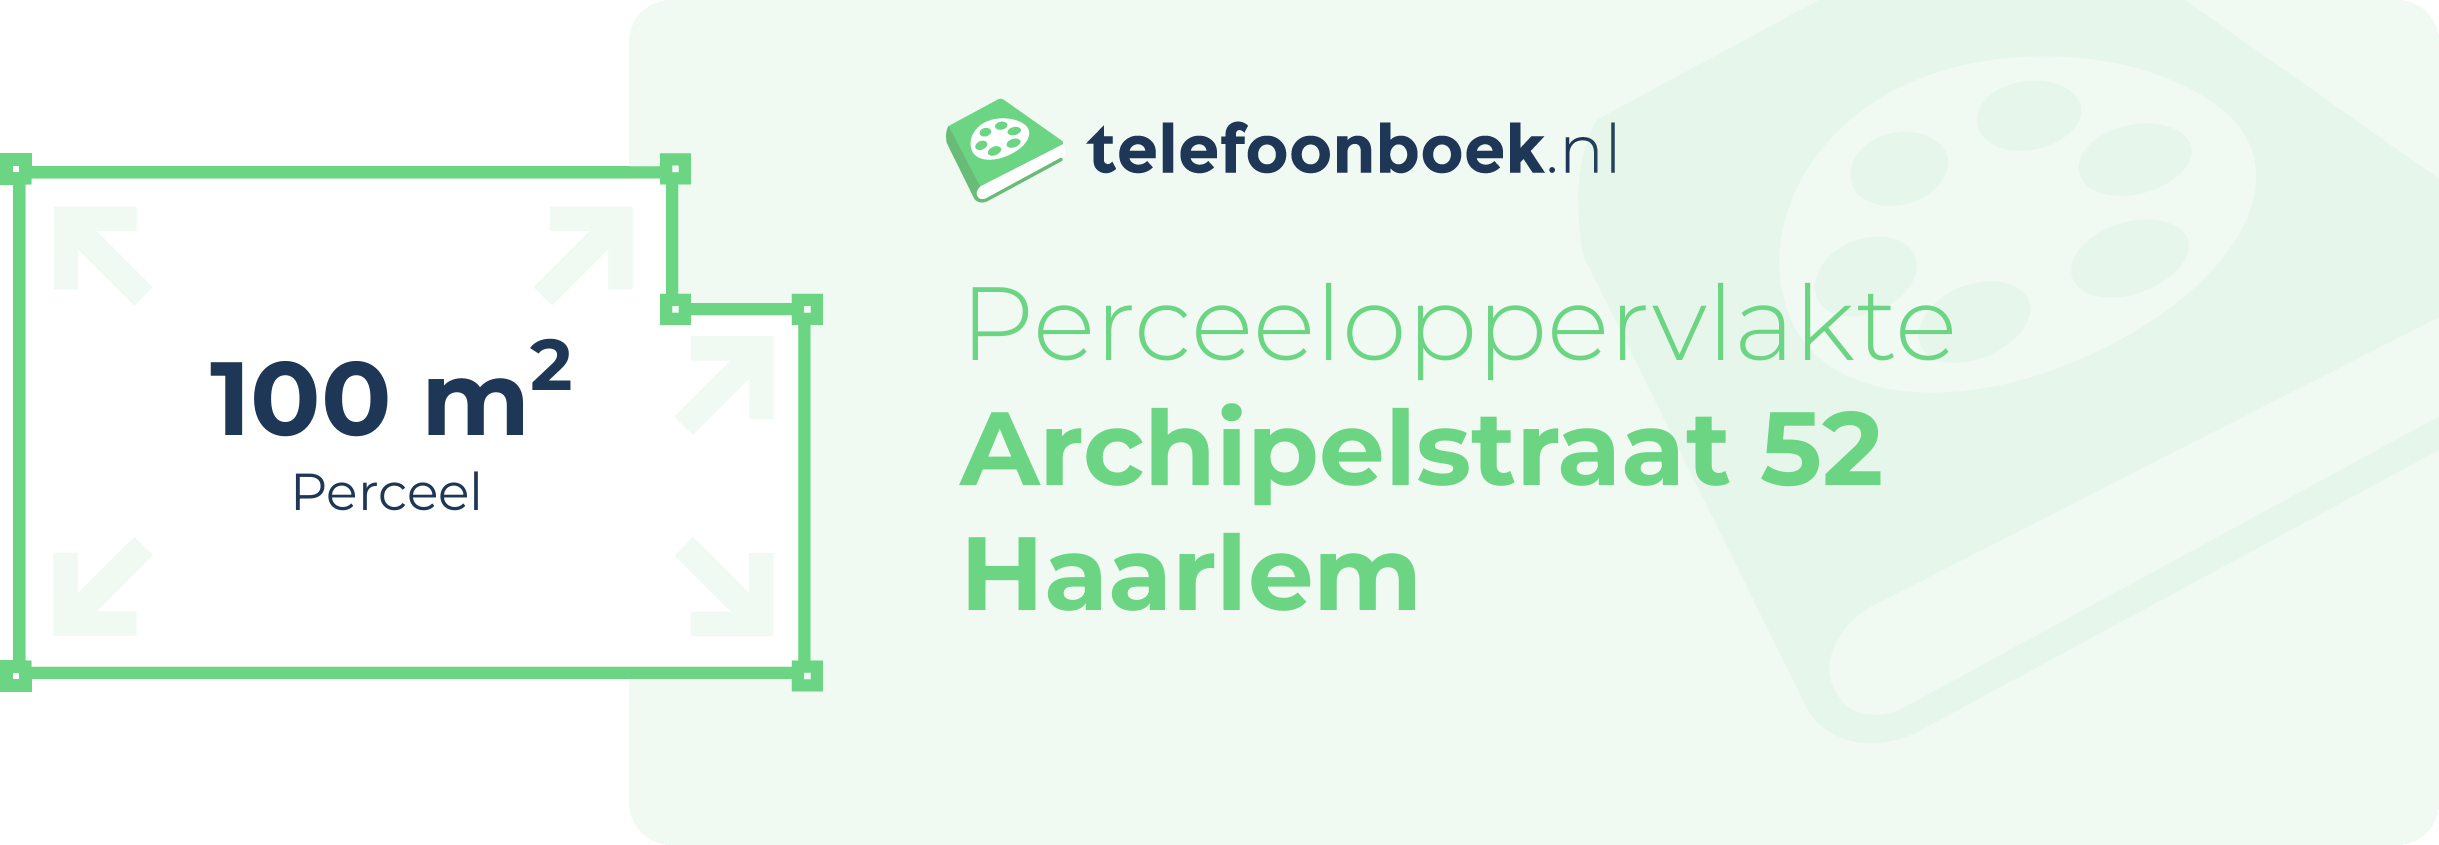 Perceeloppervlakte Archipelstraat 52 Haarlem